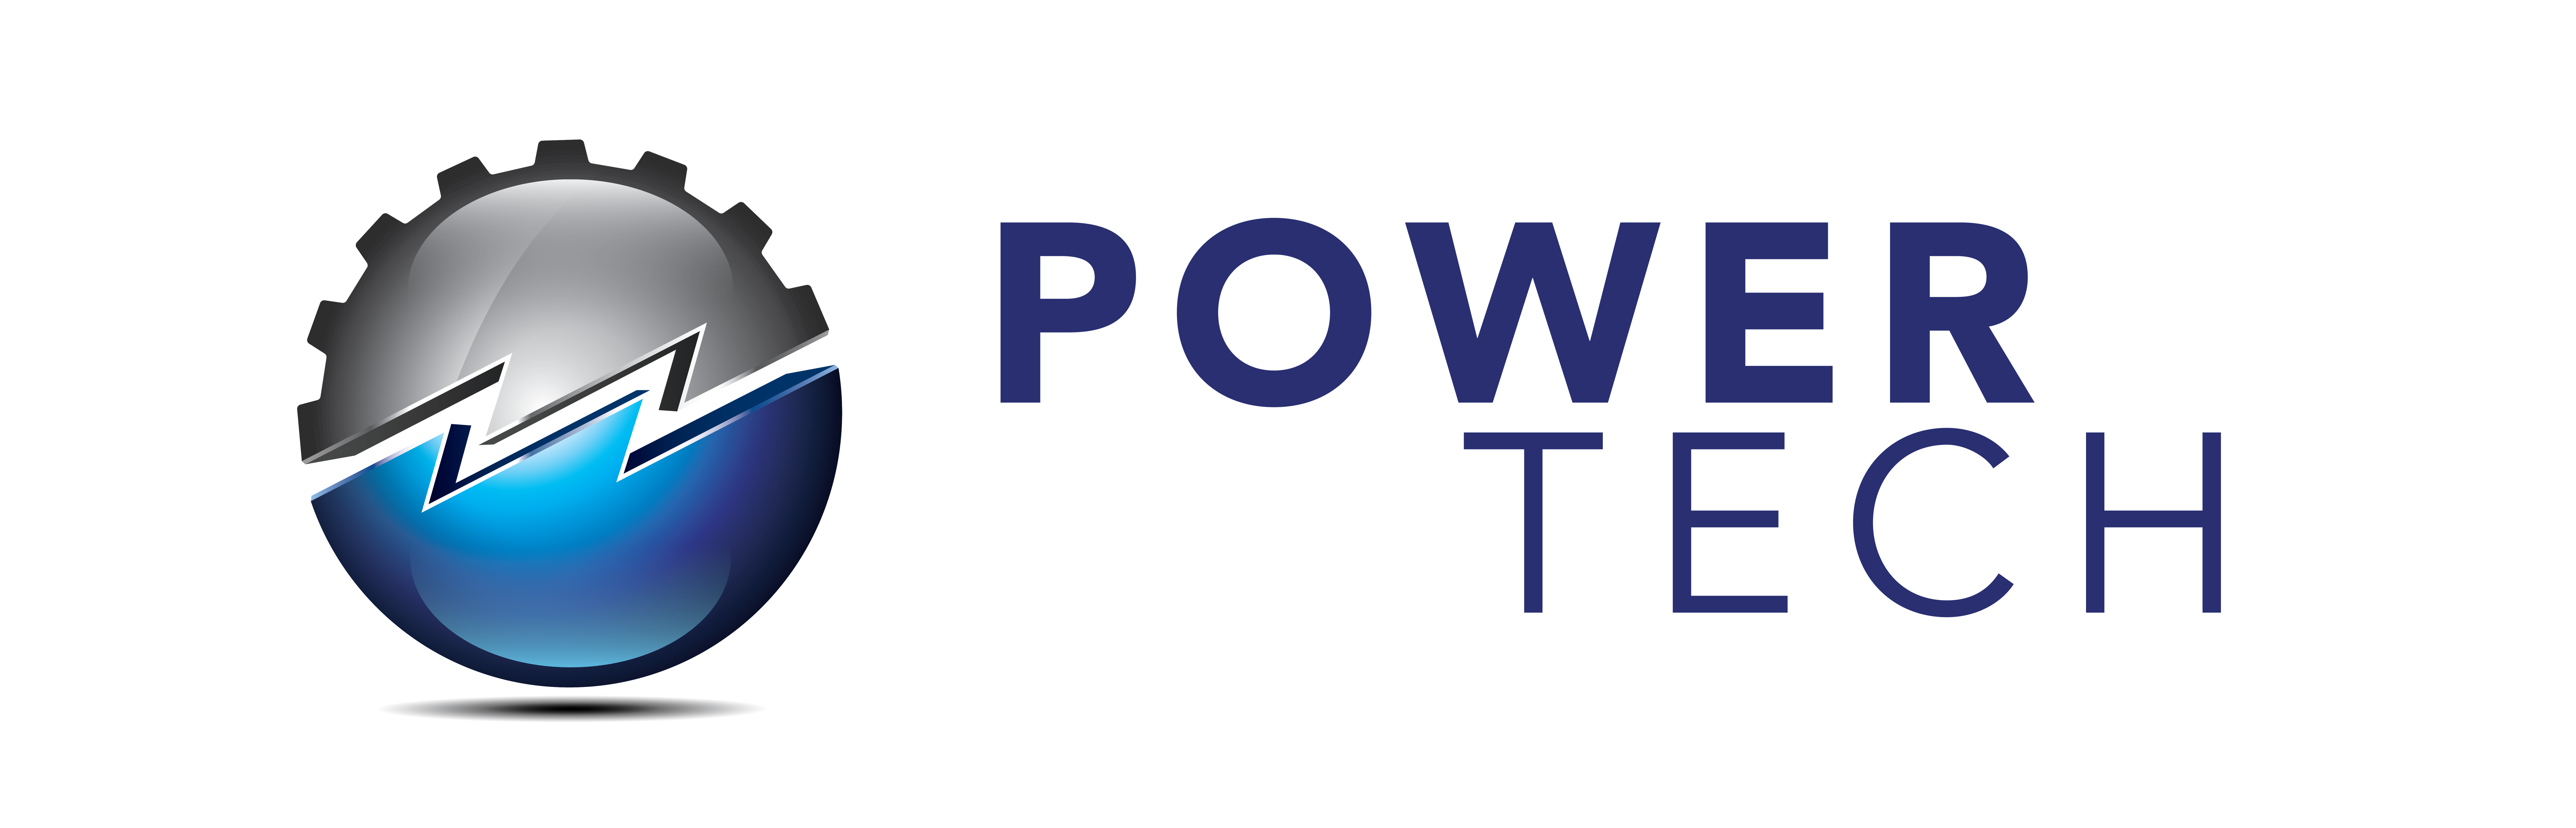 17328 5. Power Tech Logo   Full   Transparent Background   Pixels   Normal Q